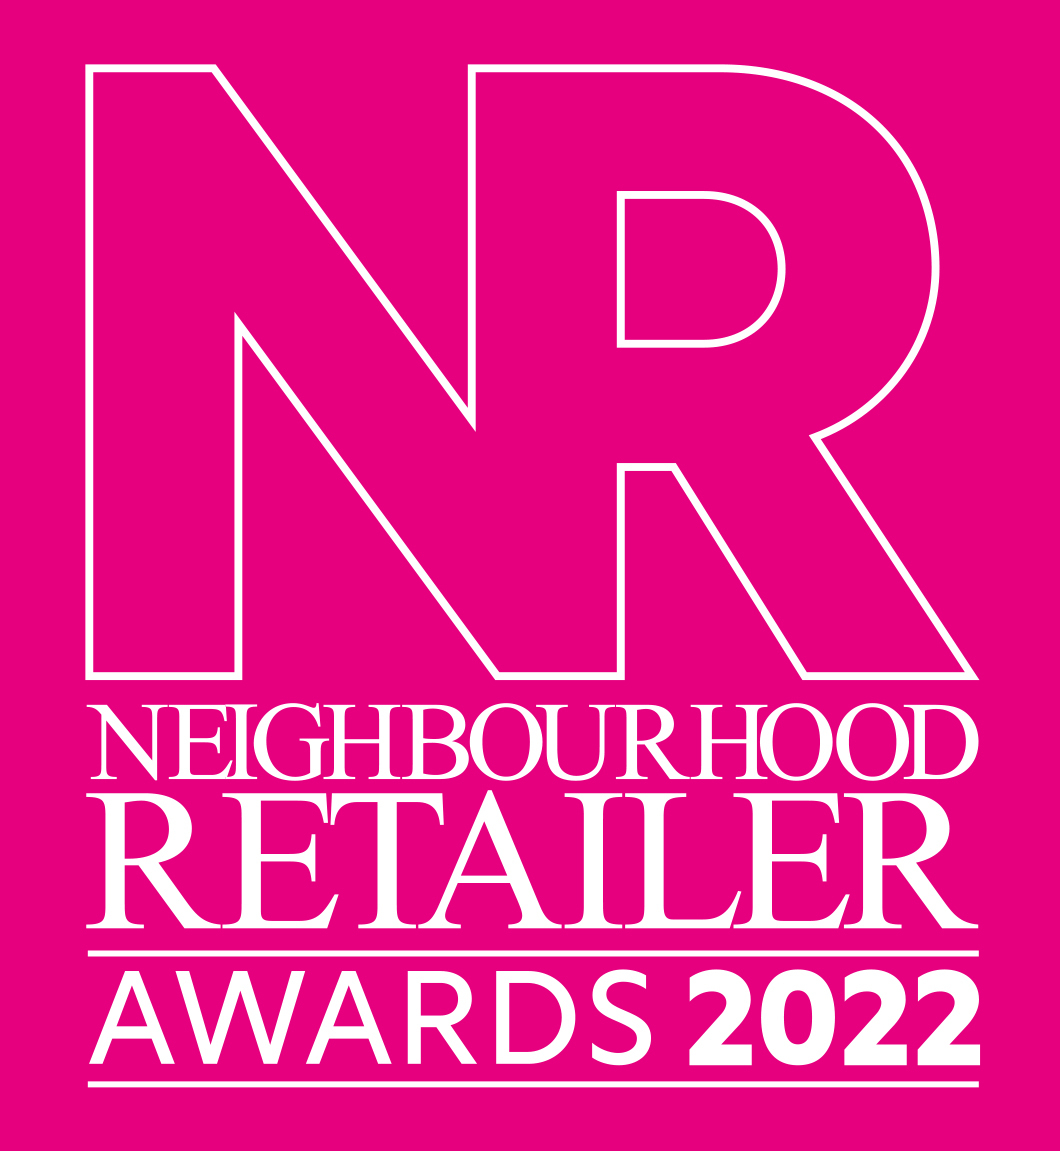 Neighbourhood Retailer Awards 2022 - Its the Final Countdown!